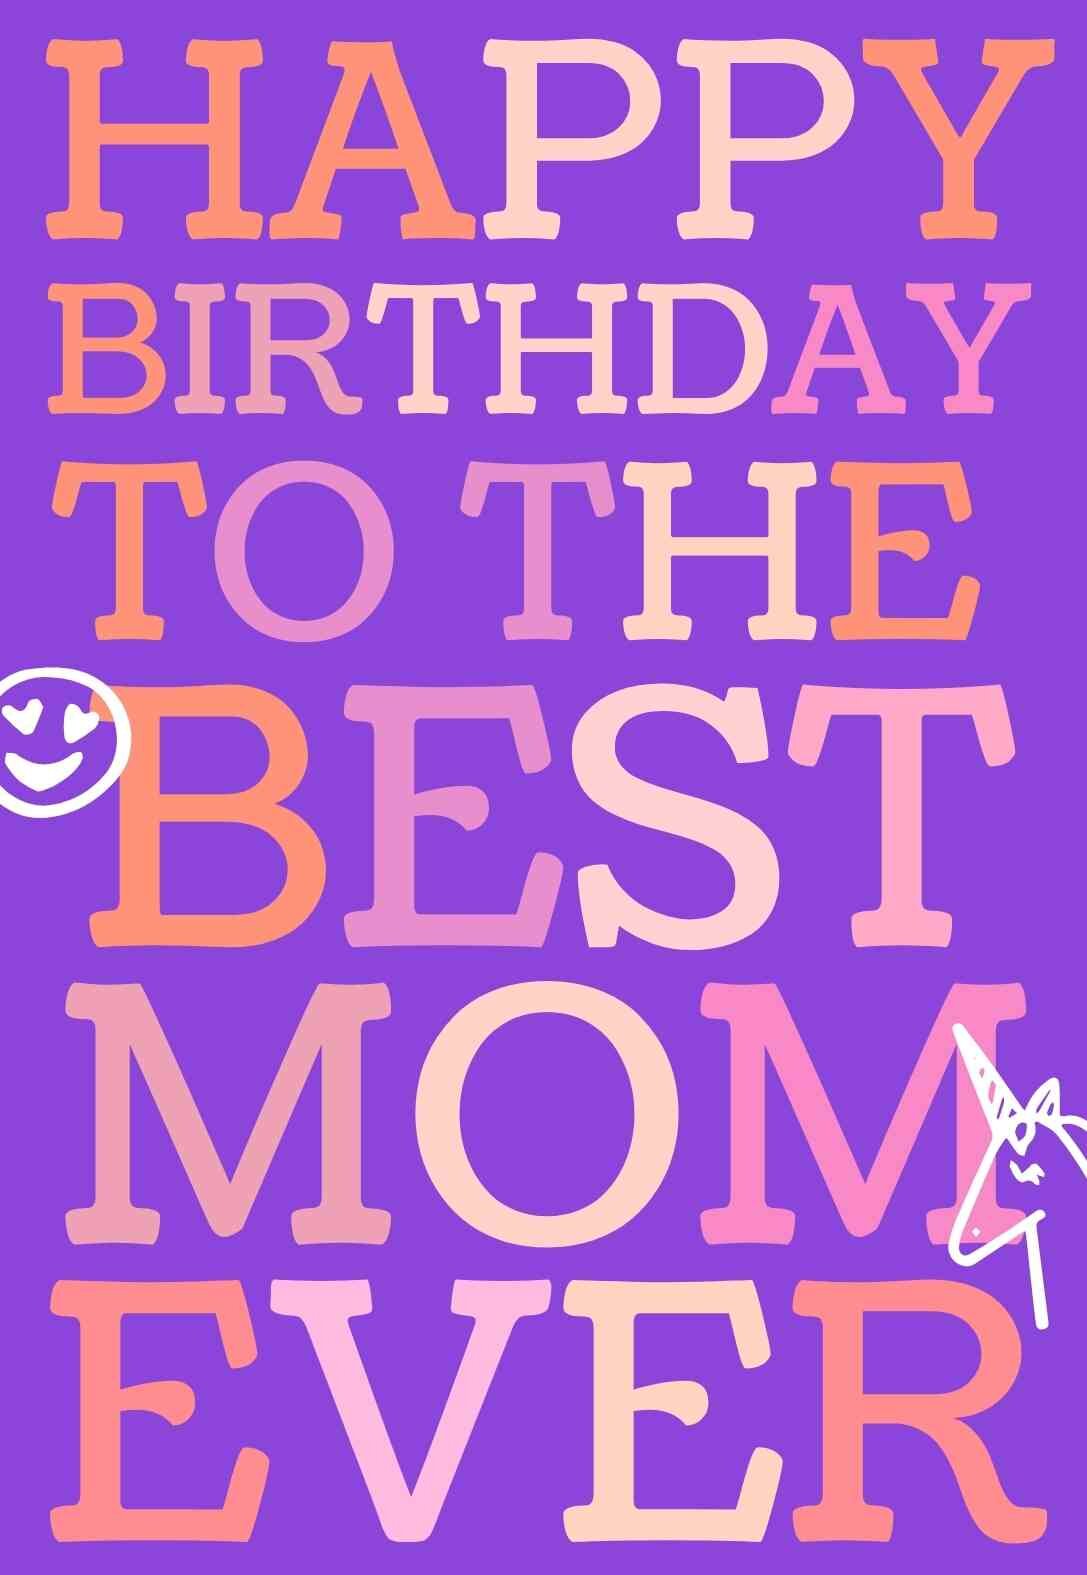 28-awsome-printable-birthday-cards-for-mom-free-printbirthday-cards